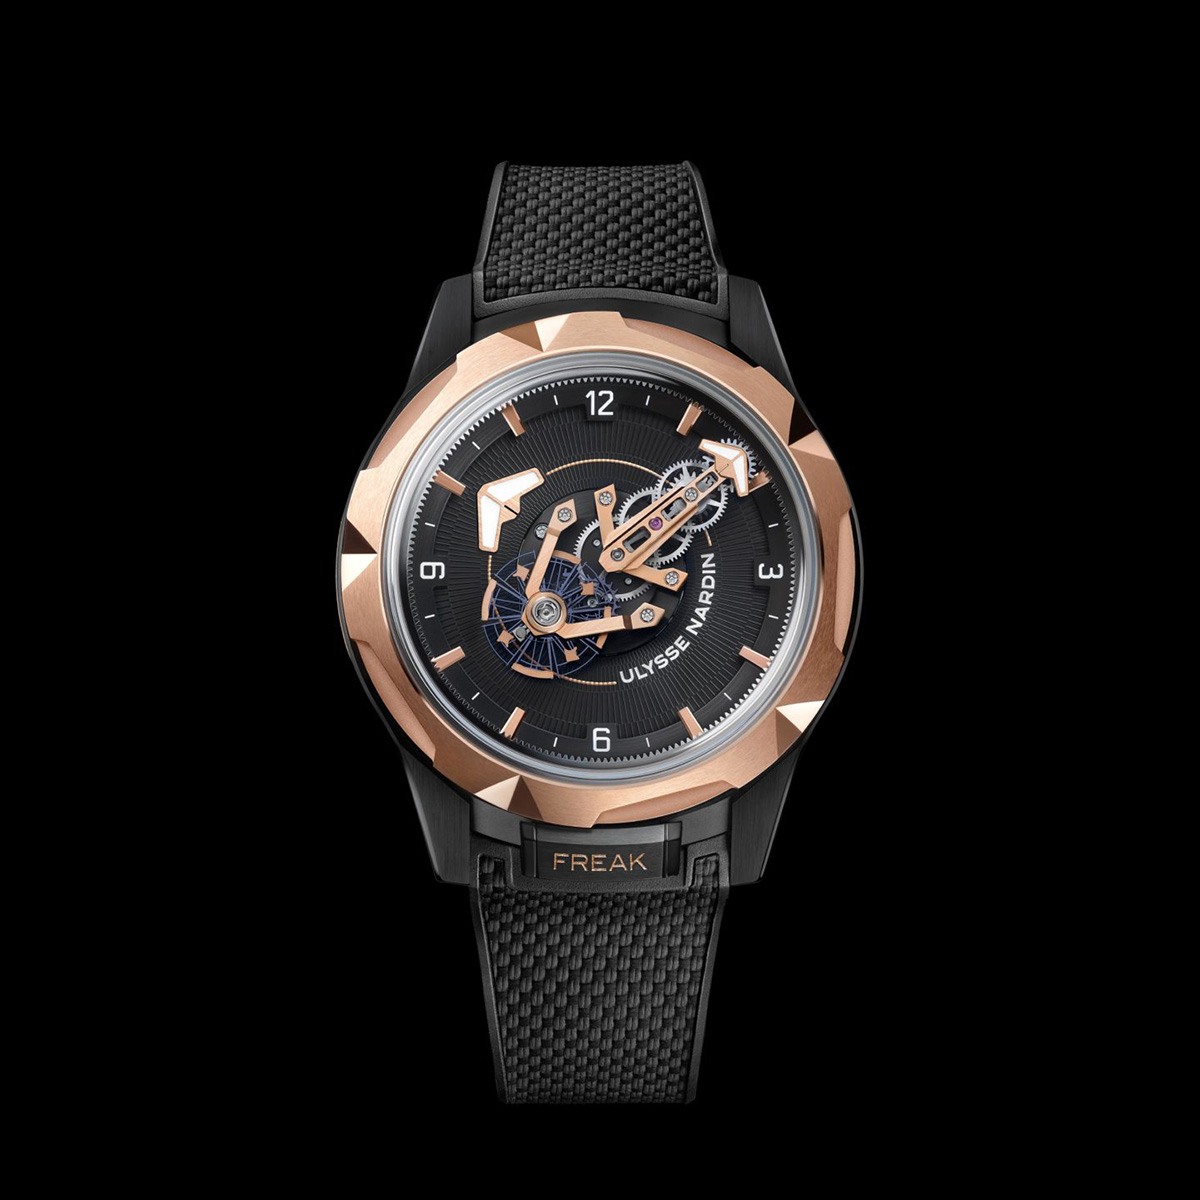 GPHG 2023 Iconic watch prize - Ulysse Nardin Freak